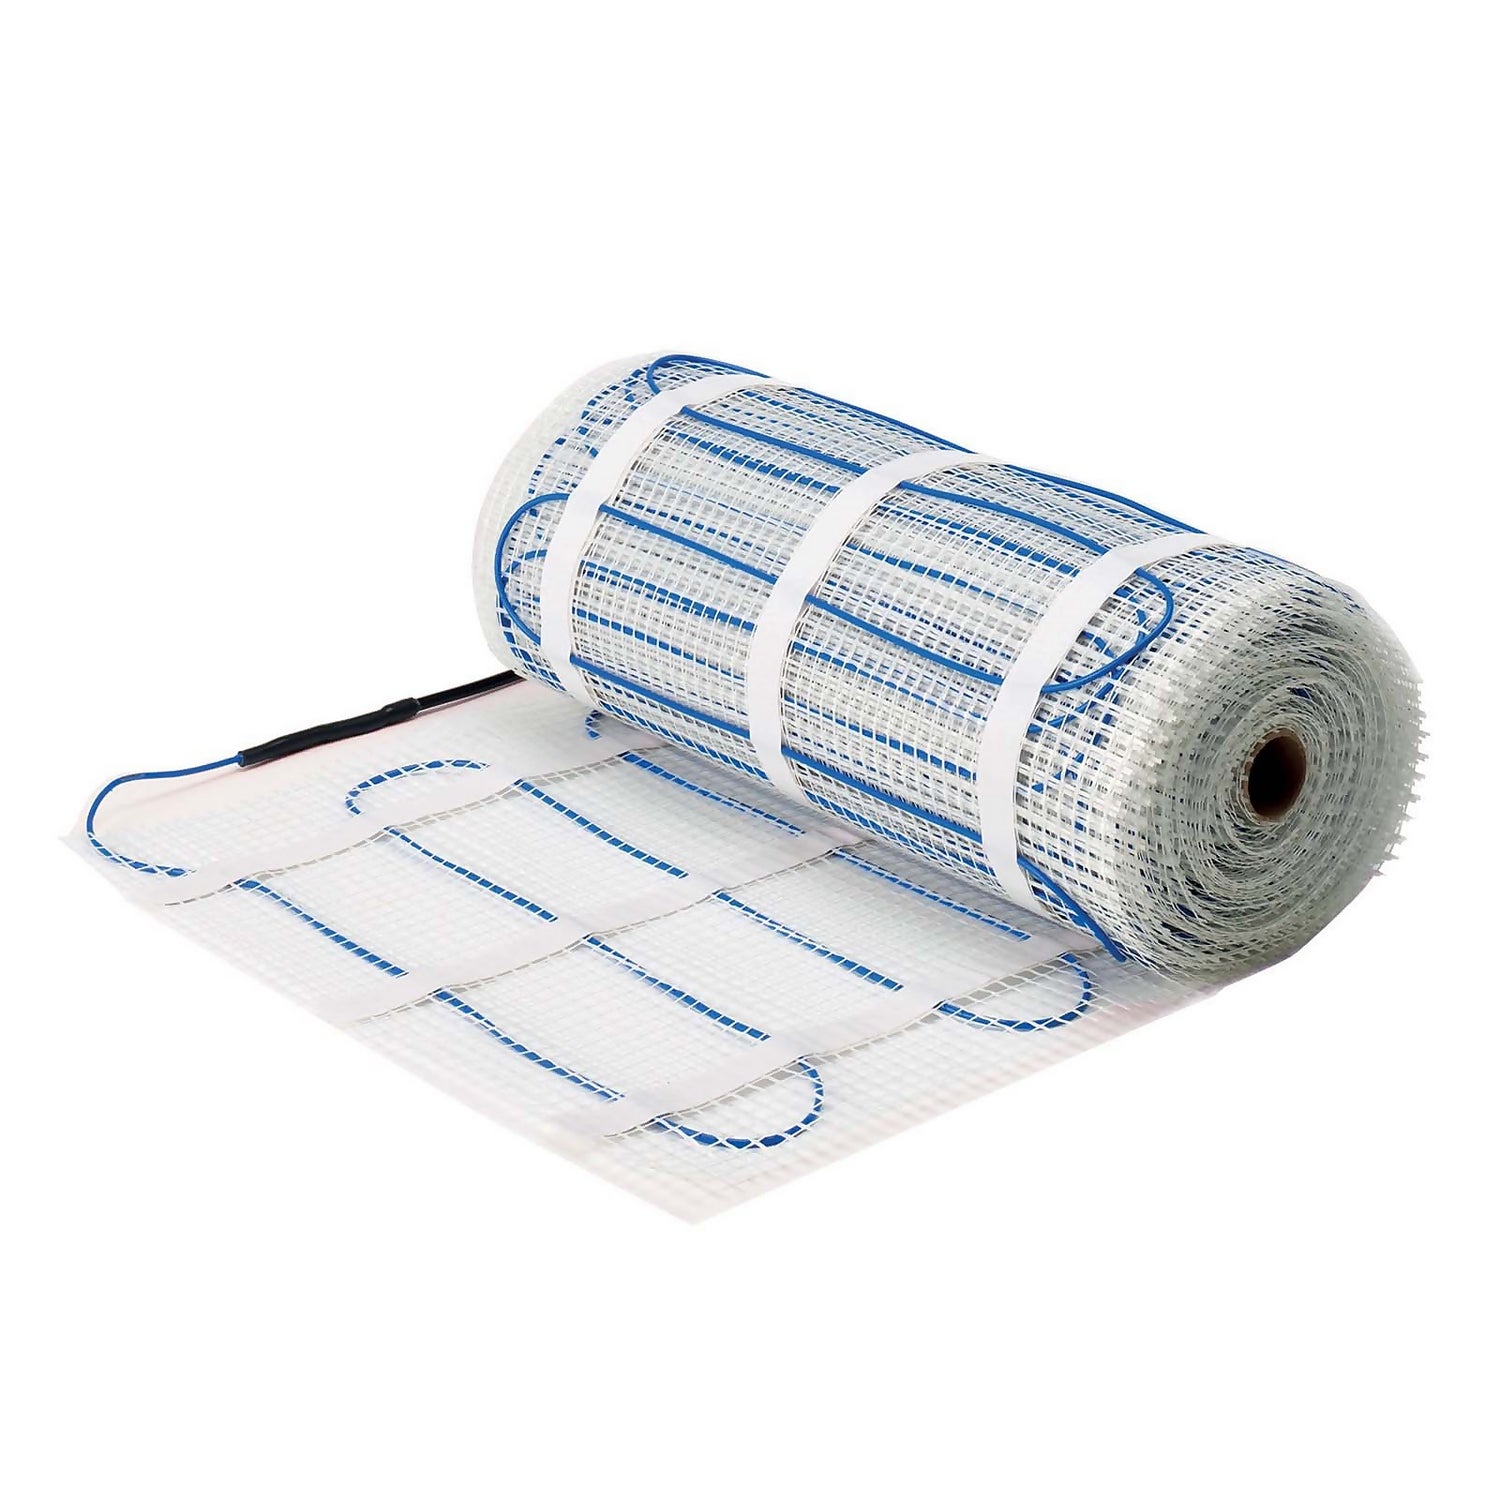 Heat Mat Underfloor Heating Kit with Insulation - 4m